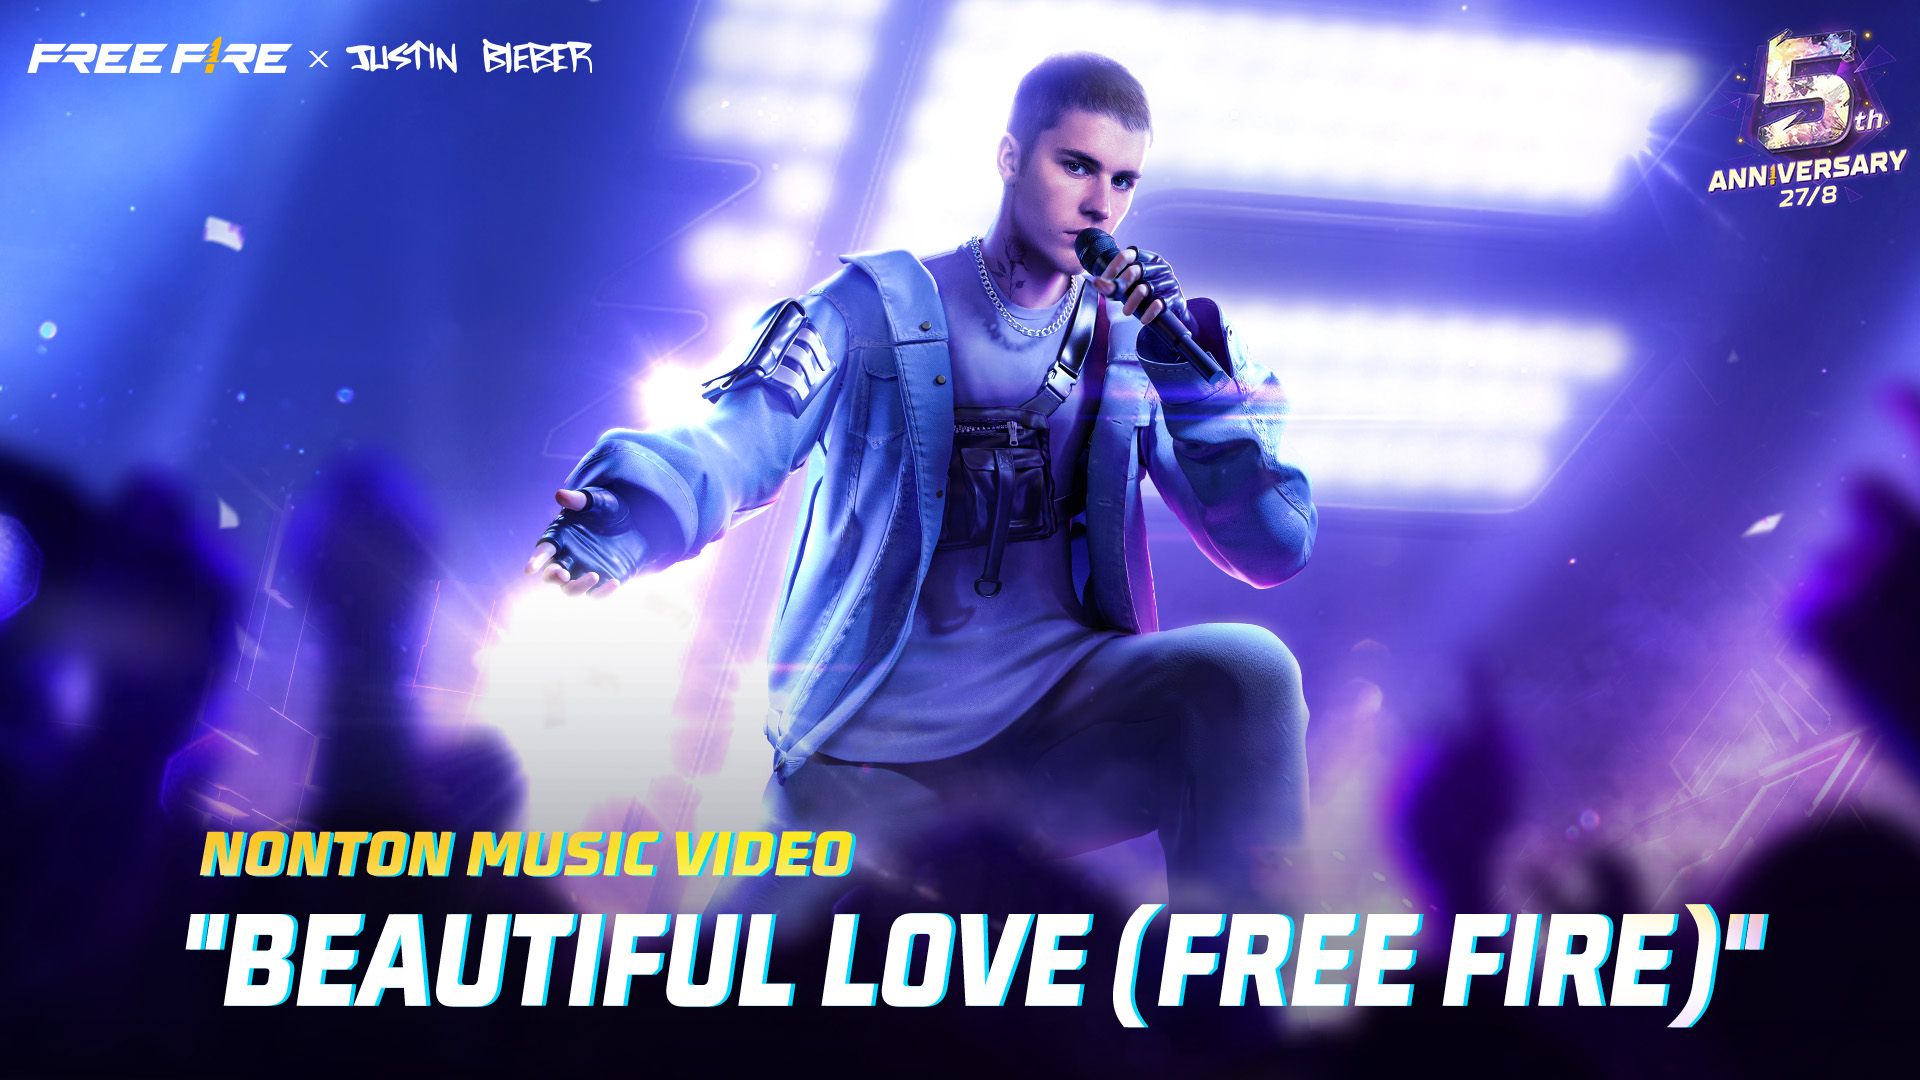 Free Fire x Justin Bieber Luncurkan Video Musik "Beautiful Love (Free Fire)"